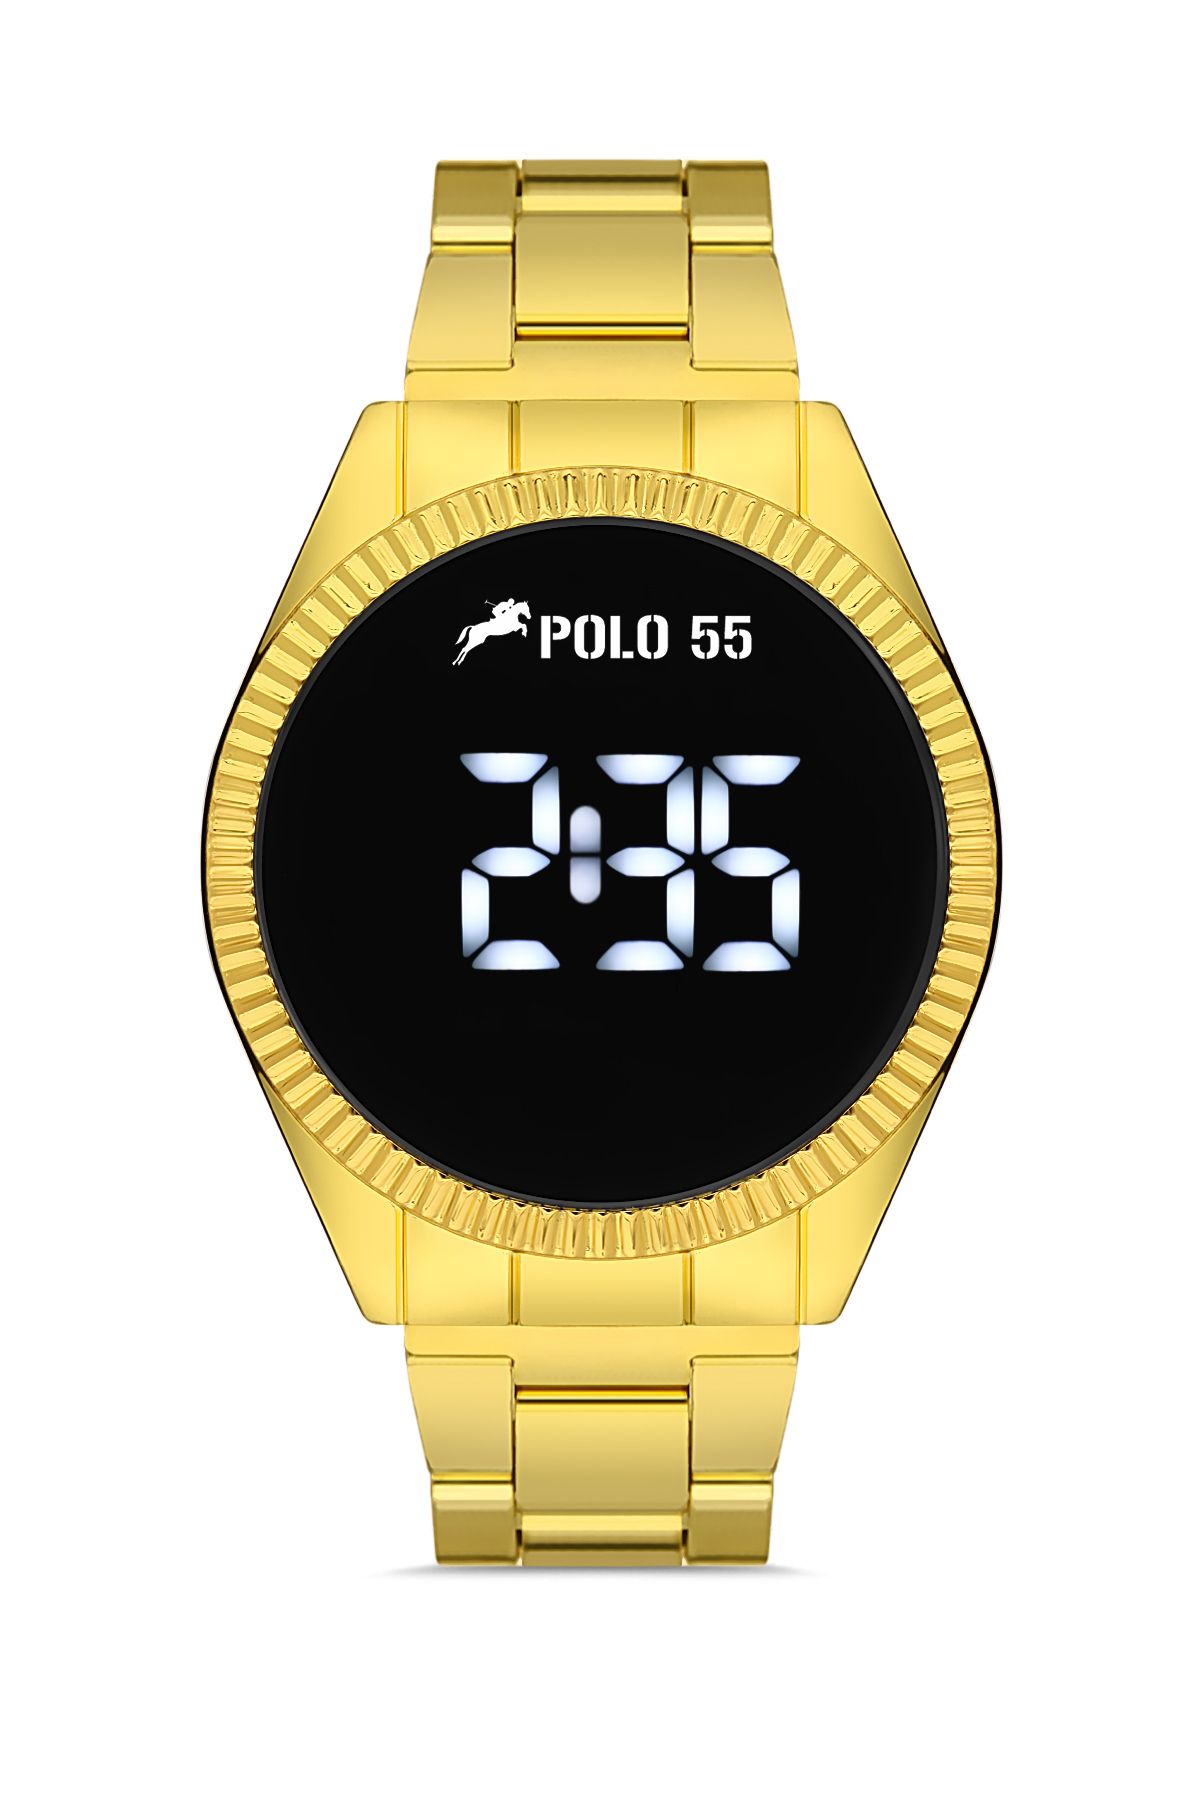 Polo55 Gold Dokunmatik Dijital Metal Kordon Erkek Kol Saati